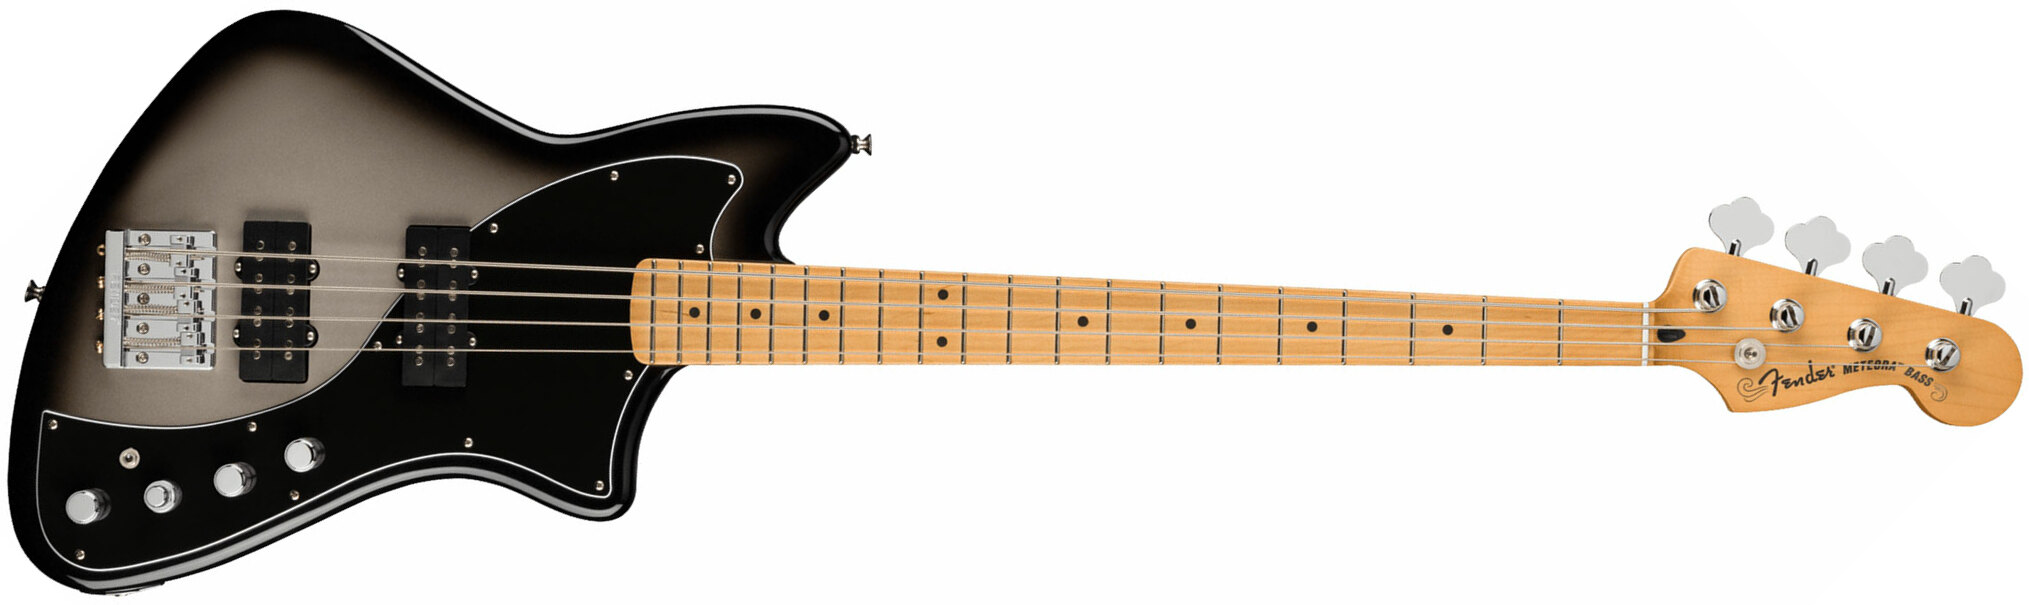 Fender Meteora Bass Active Player Plus Mex Mn - Silver Burst - Solid body elektrische bas - Main picture